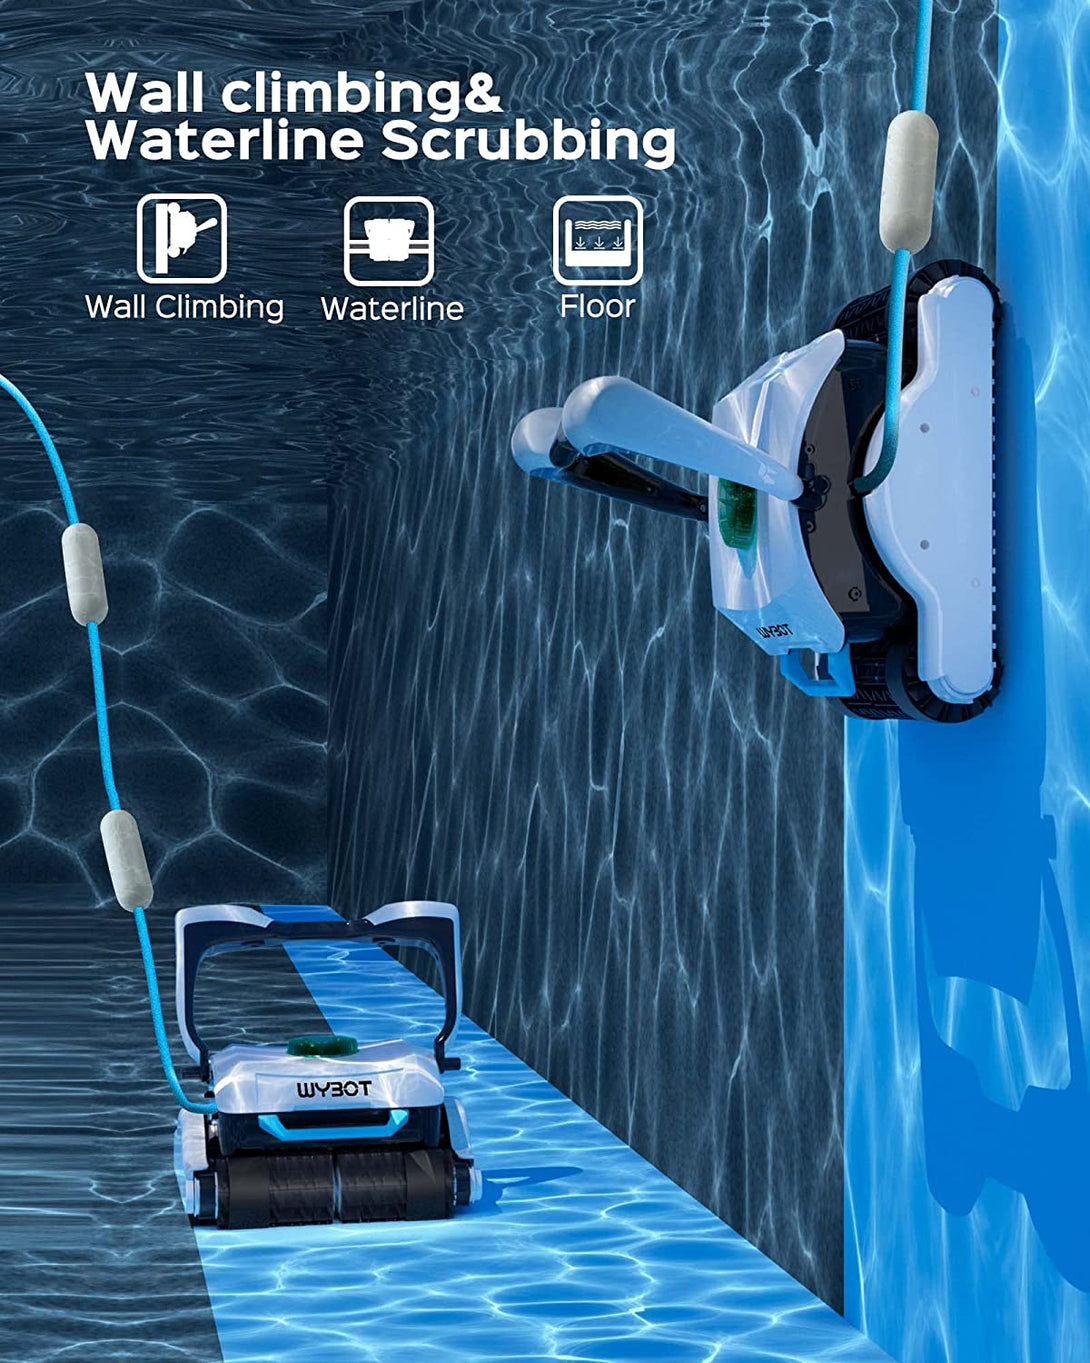 WYBOT Grampus 800 Corded Robotic Pool Cleaner